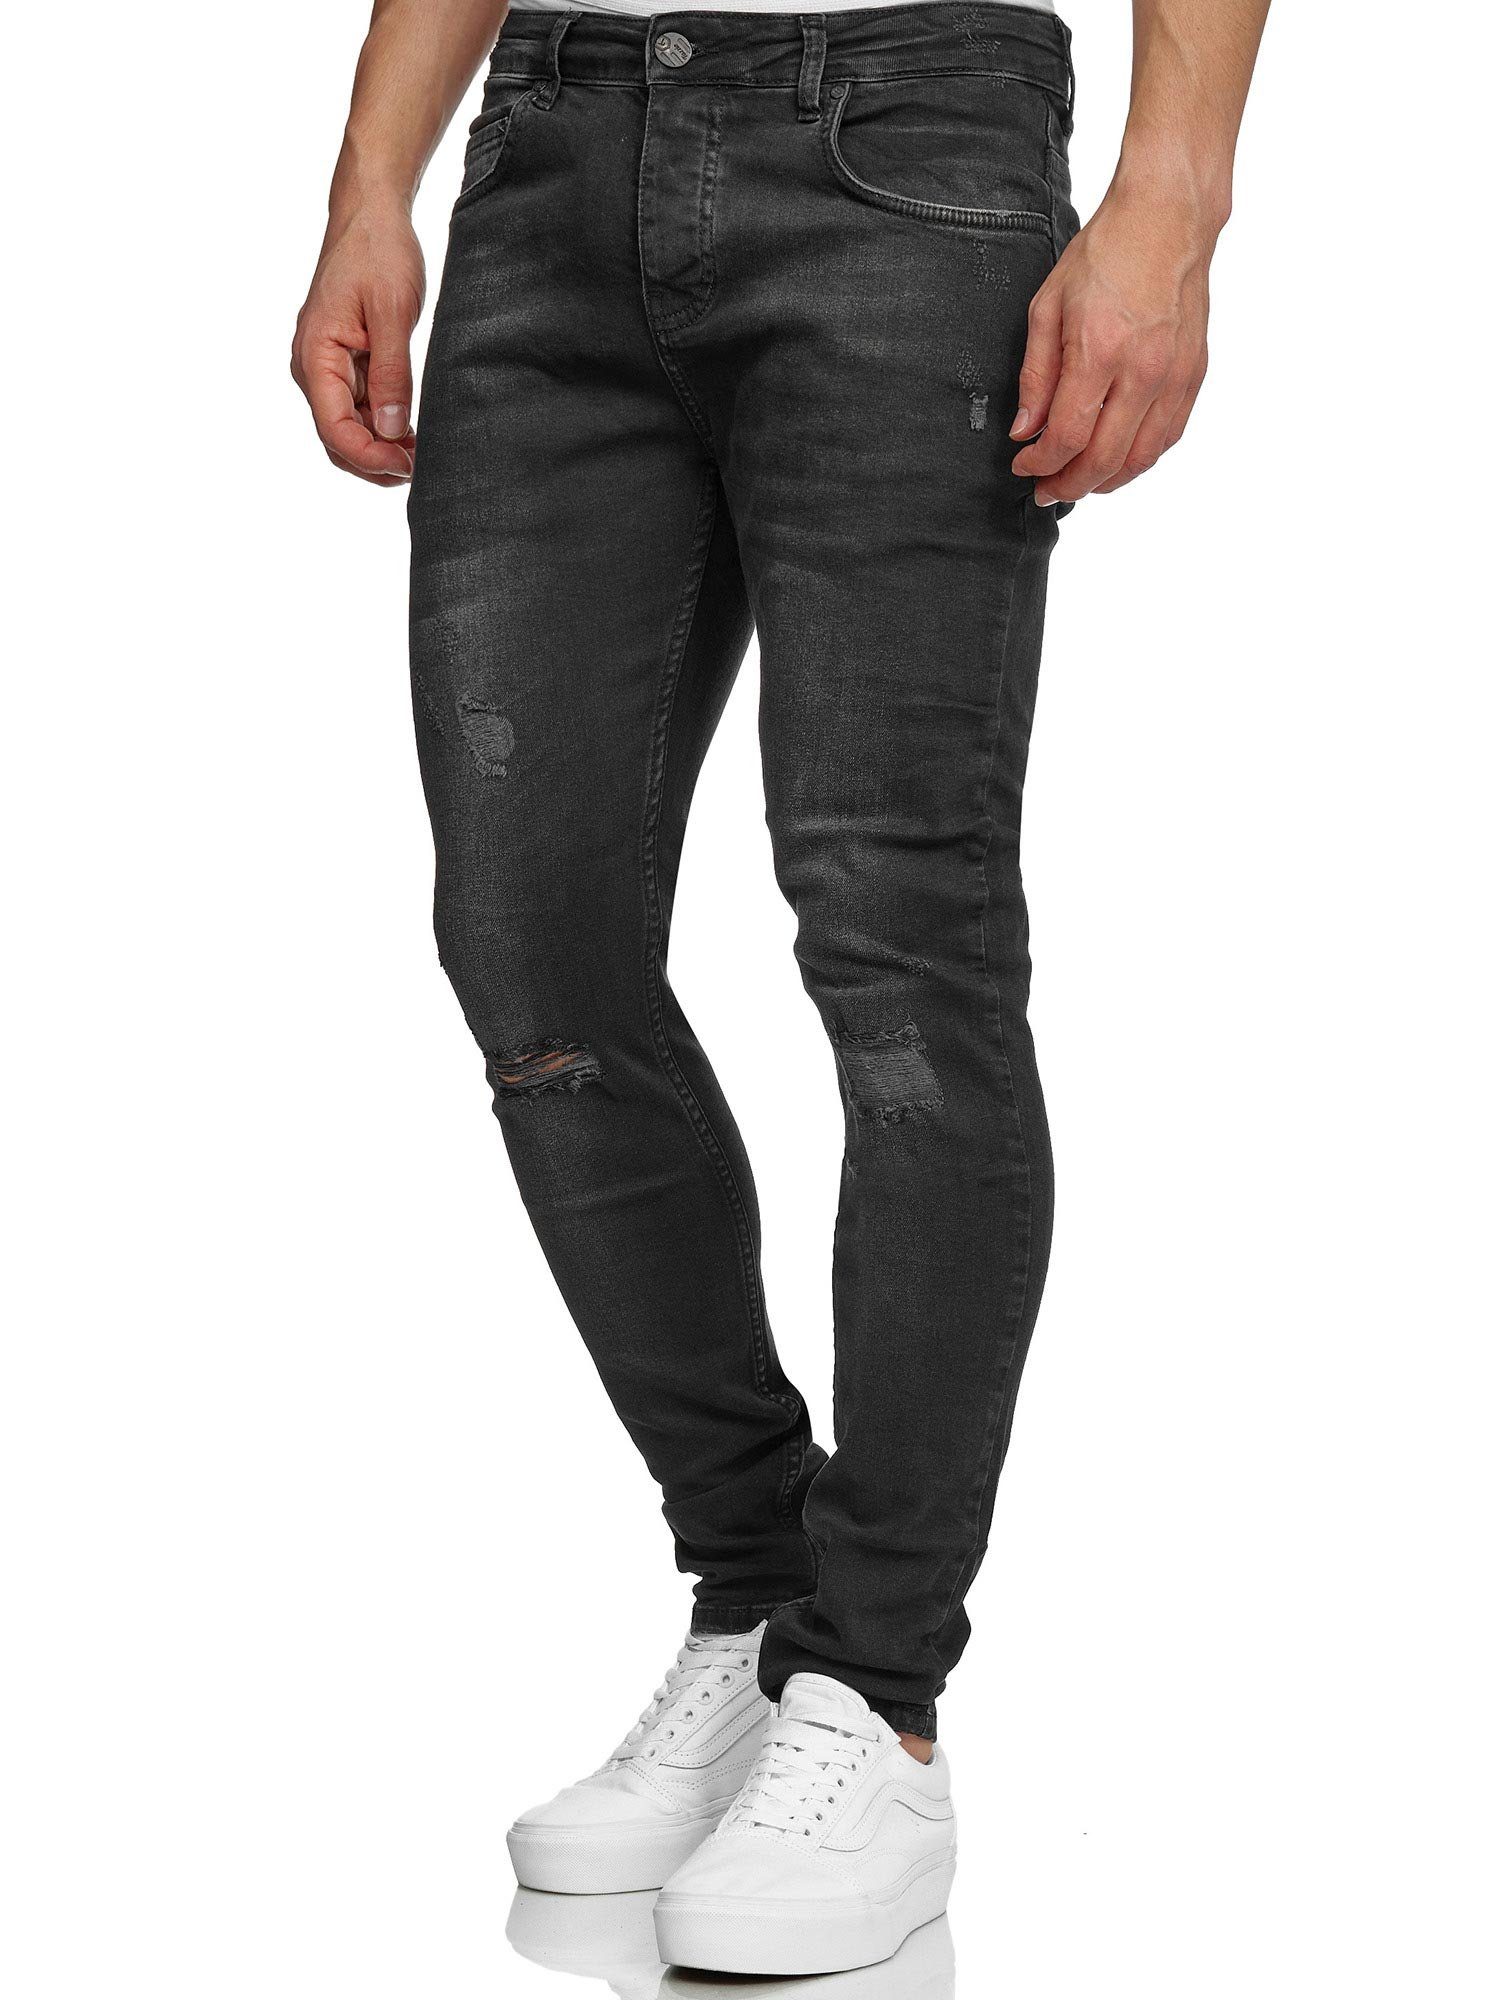 Schwarze Herren Skinny-Jeans online kaufen | OTTO